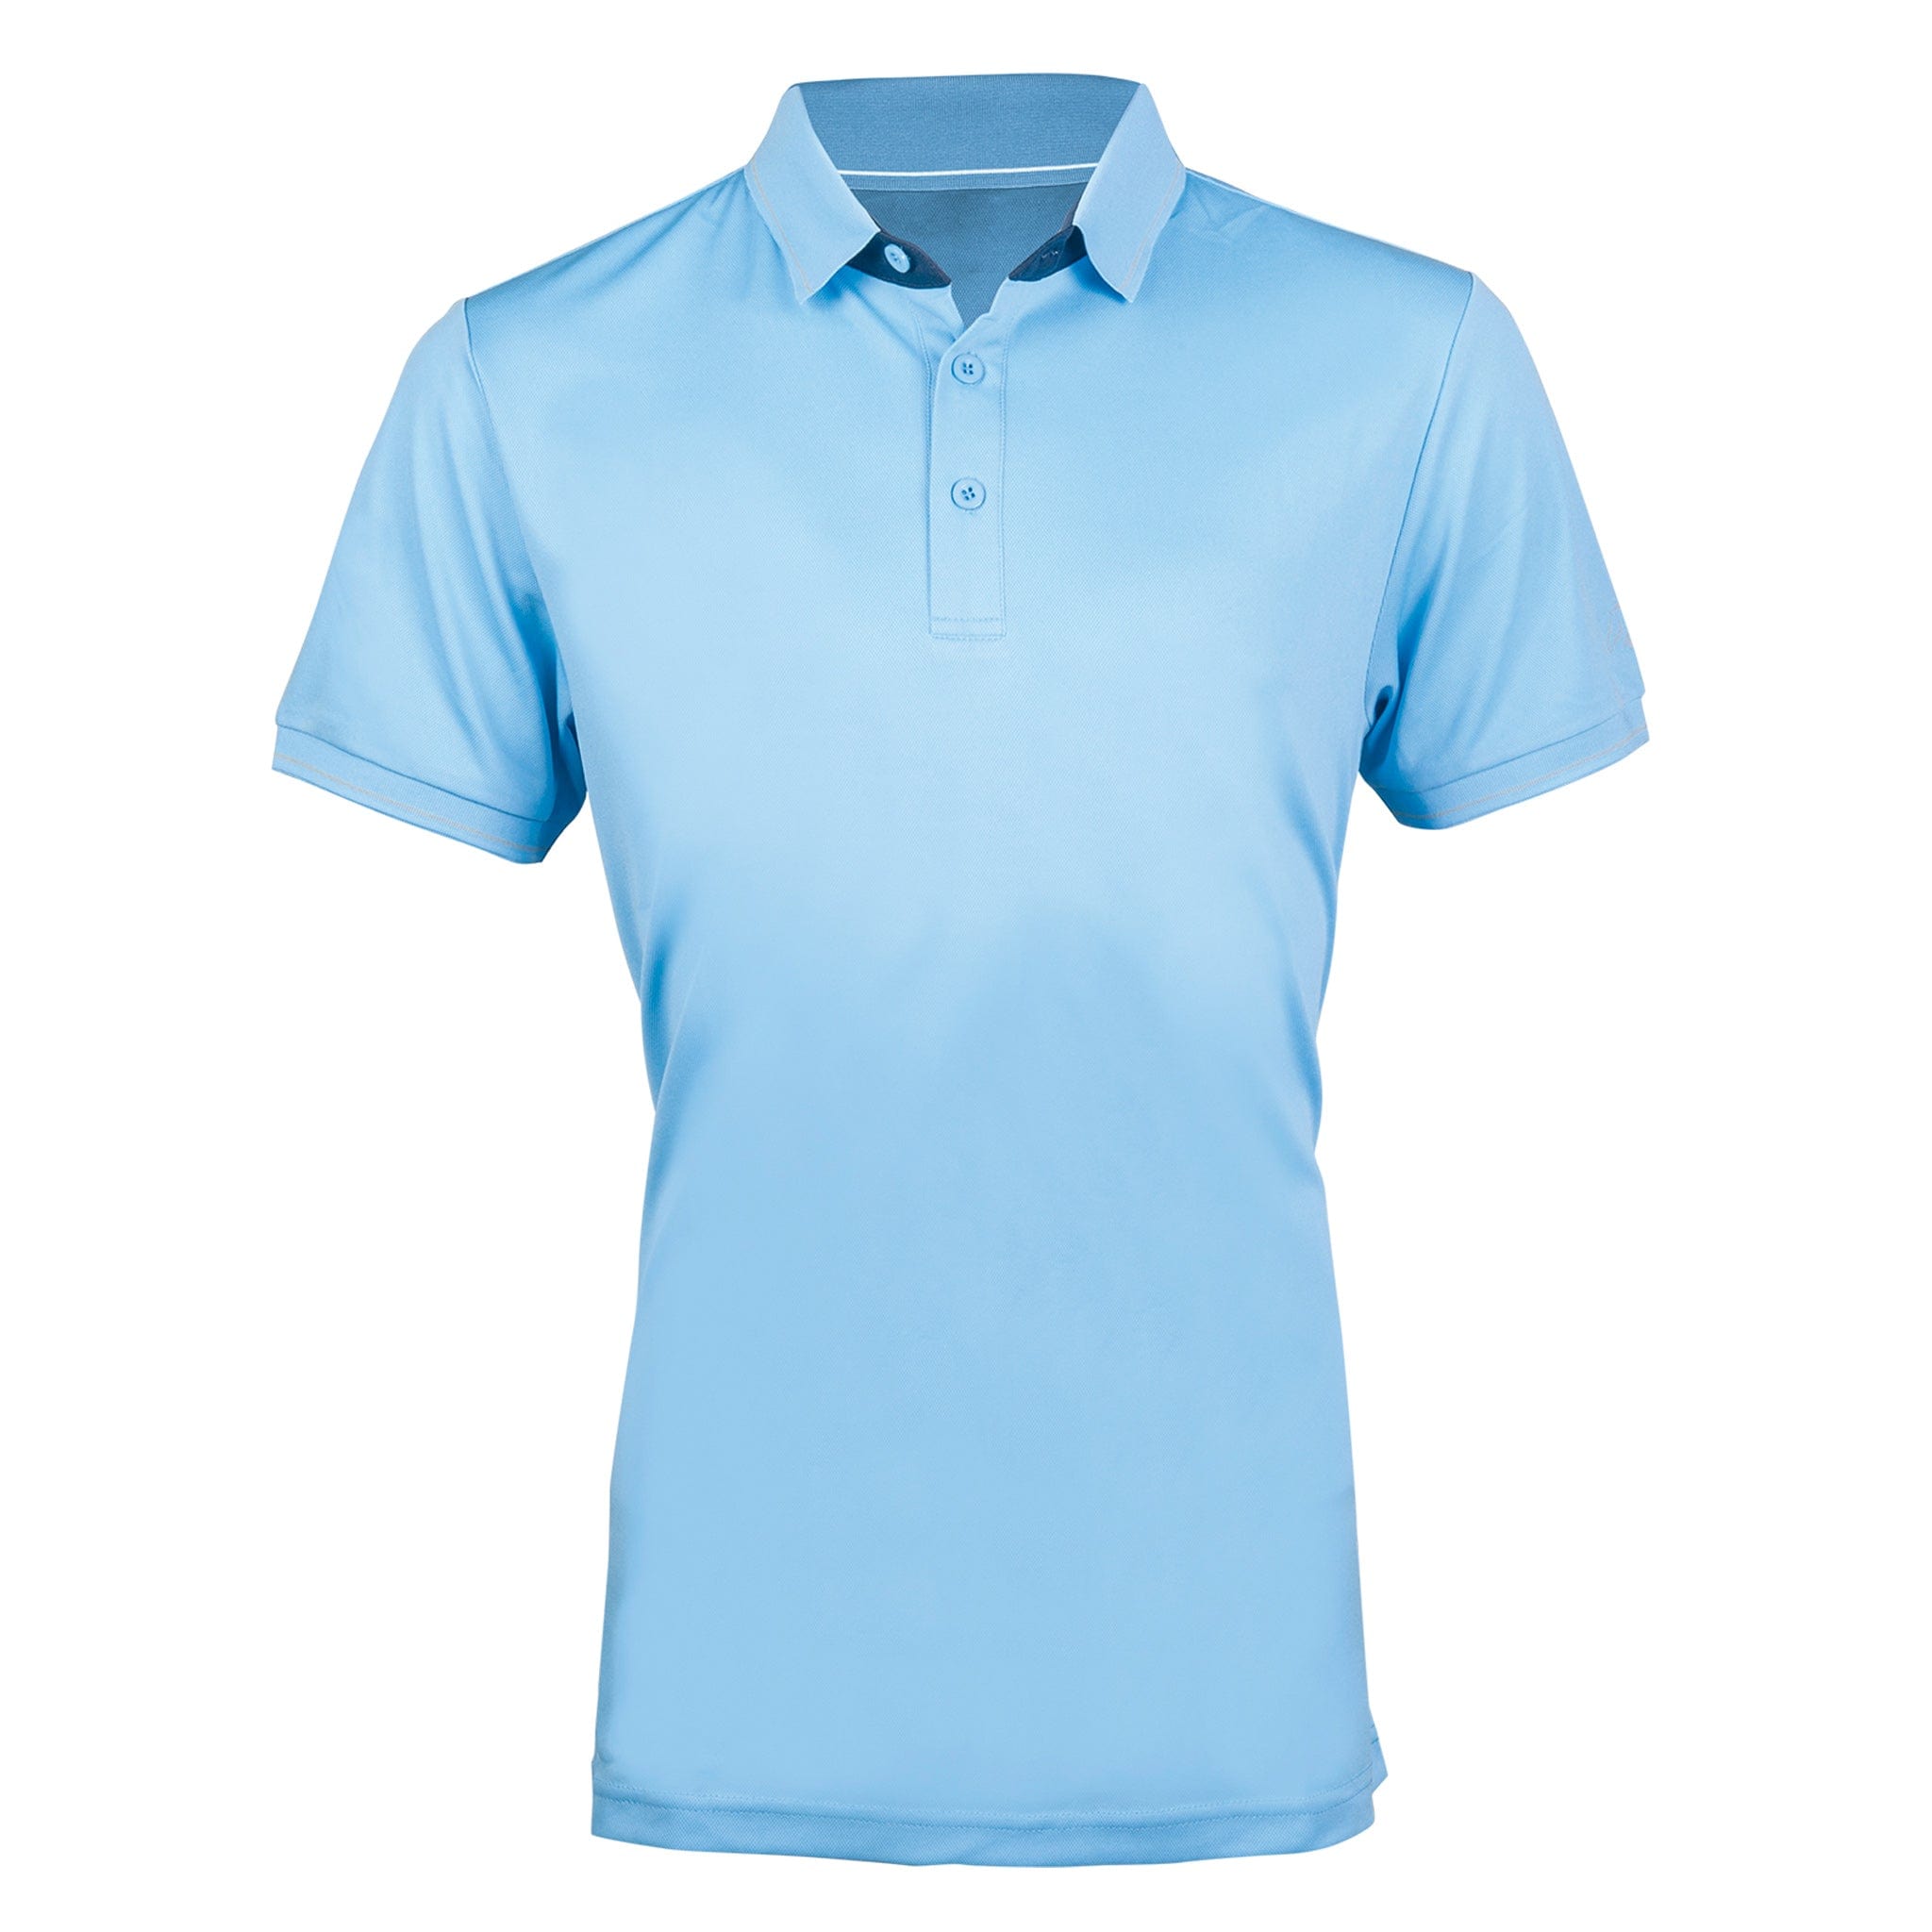 HKM Men's Classico Polo Shirt 12704 Light Blue Front View